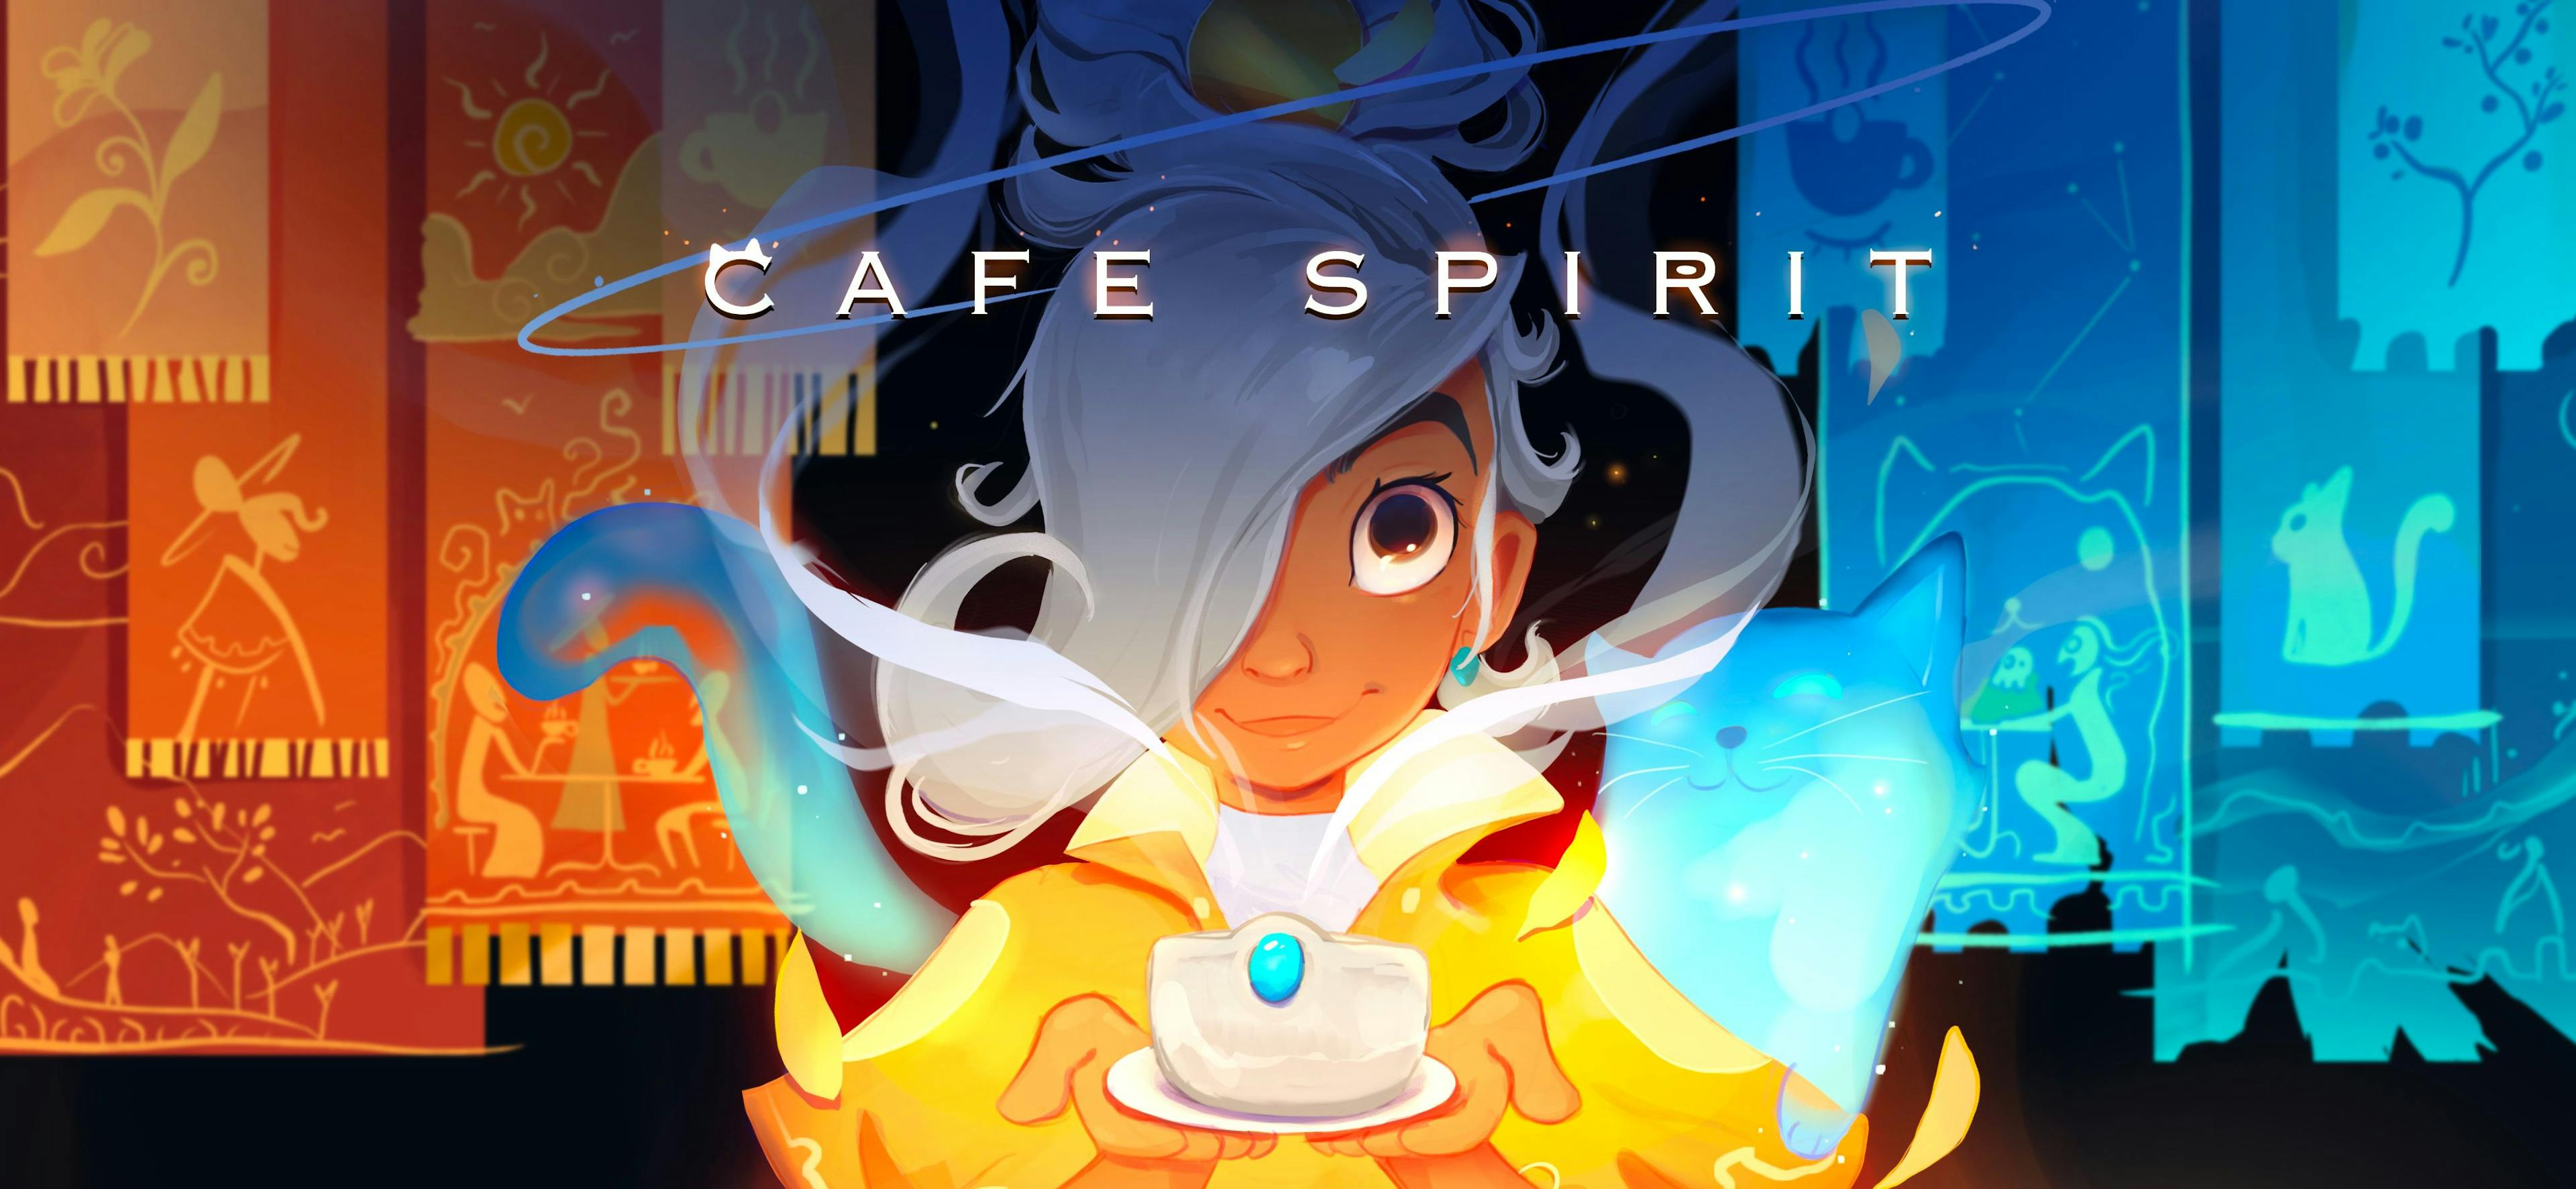 Cafe Spirit cover